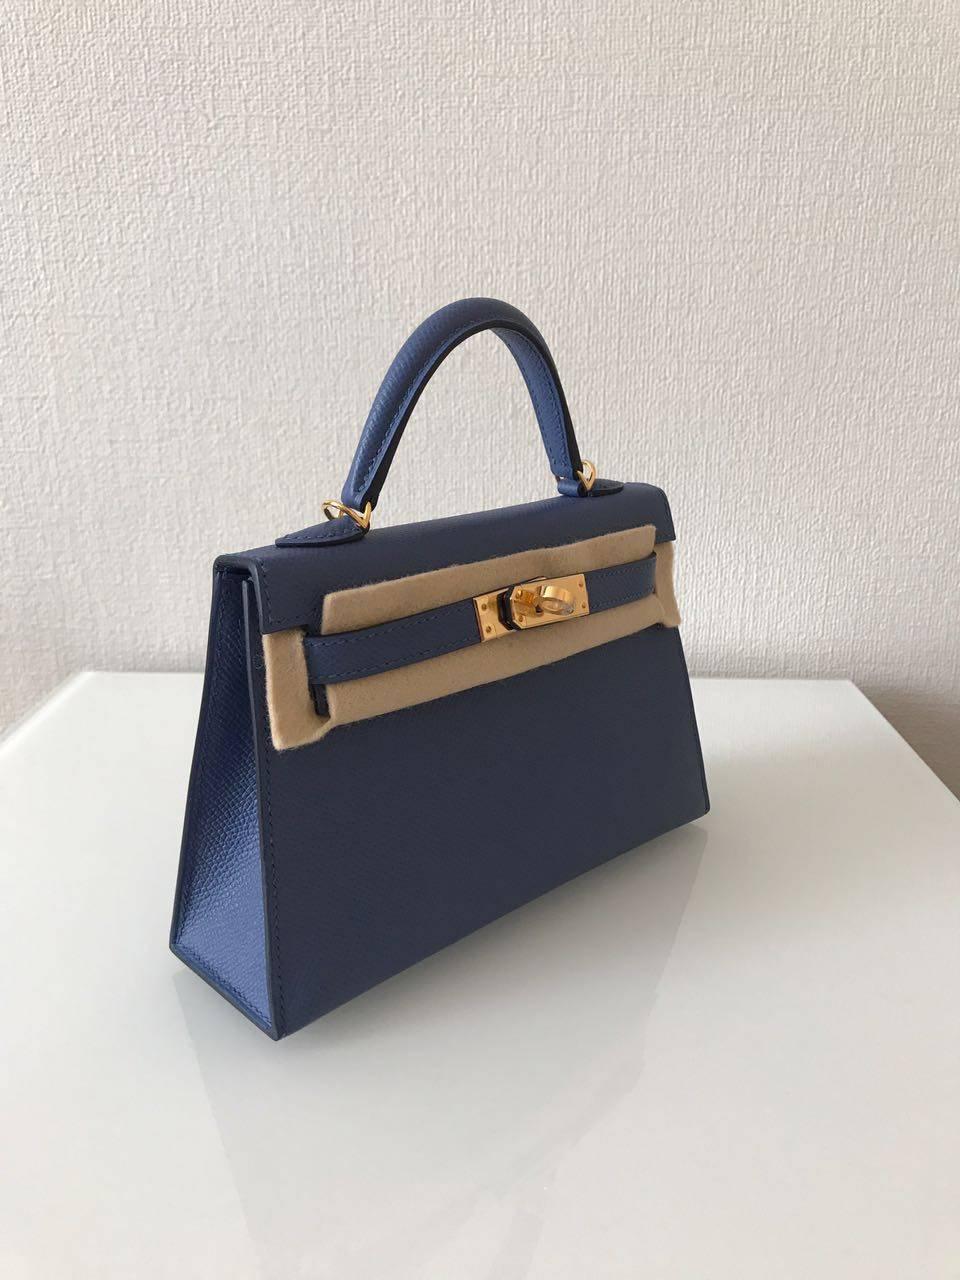 New never worn Hermes Bag
Kelly
Size 20
Leather Epsom
Color Blue Brighton
Gold hardware

Comes full set: 
Original box
Invoice
Raincoat
Padlock & Keys
Dustbag
